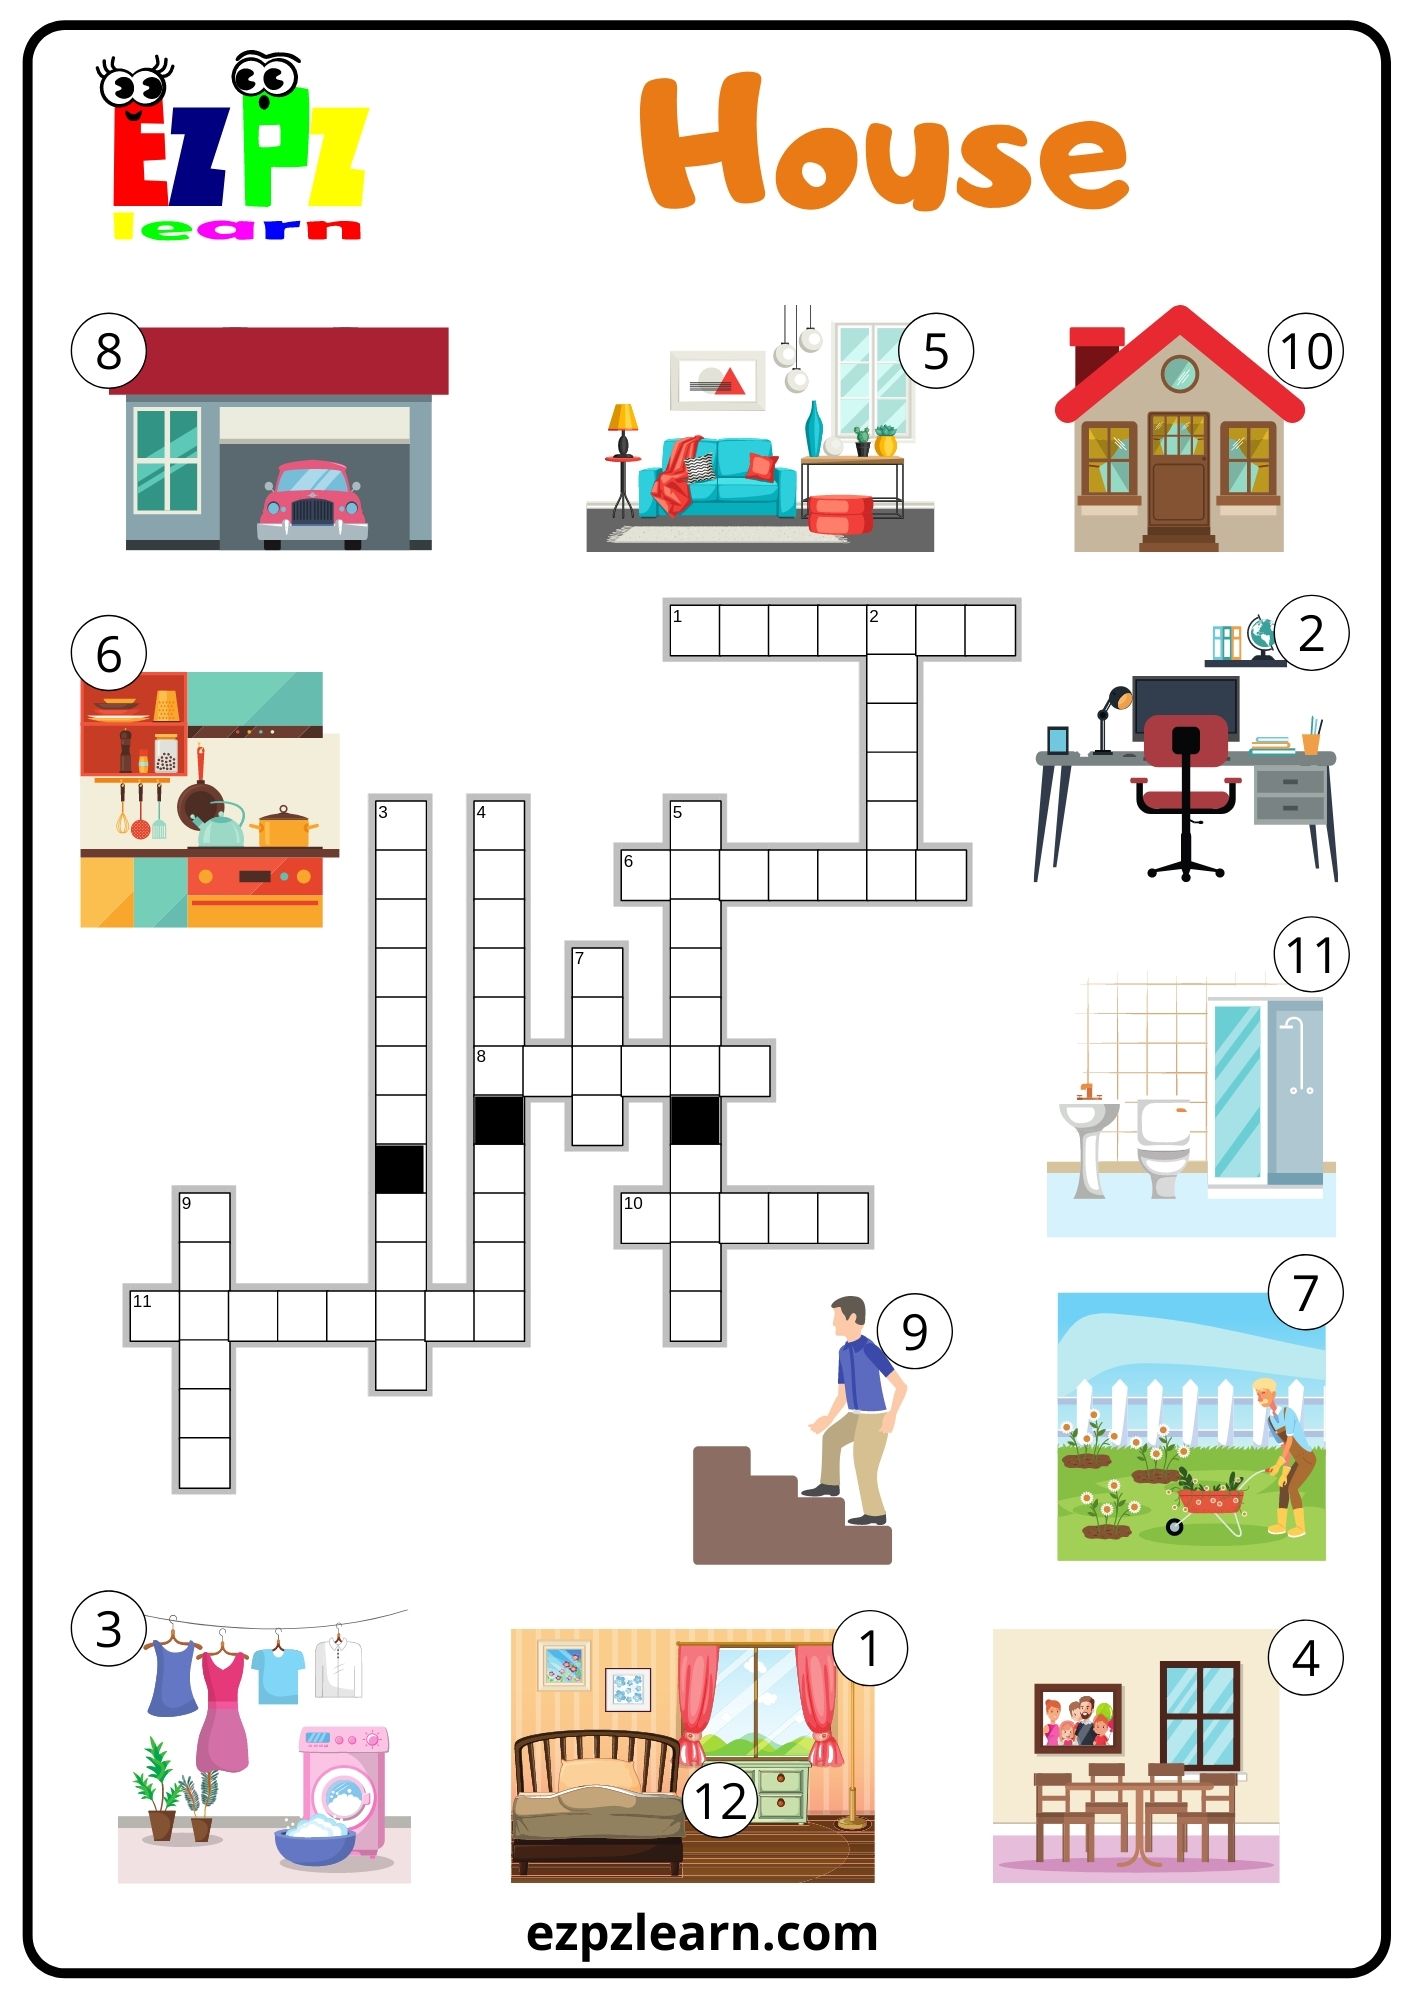 House Rooms Crossword Ezpzlearn com